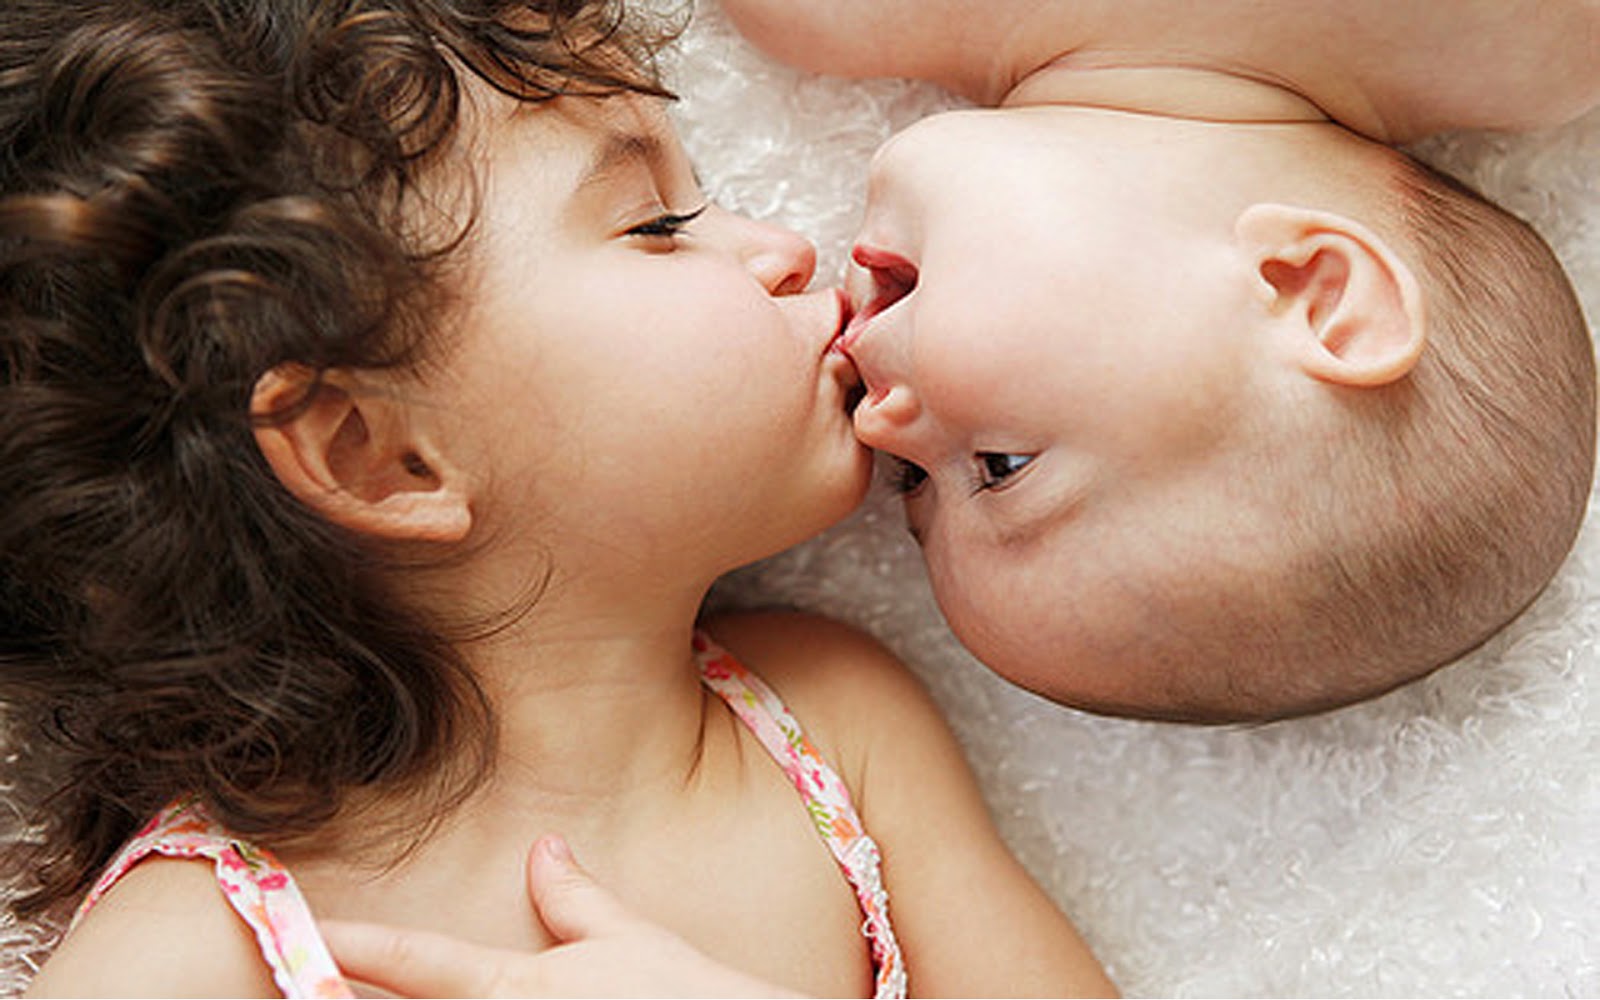 Romantic Kiss - Baby Lip Kiss Images Hd - HD Wallpaper 